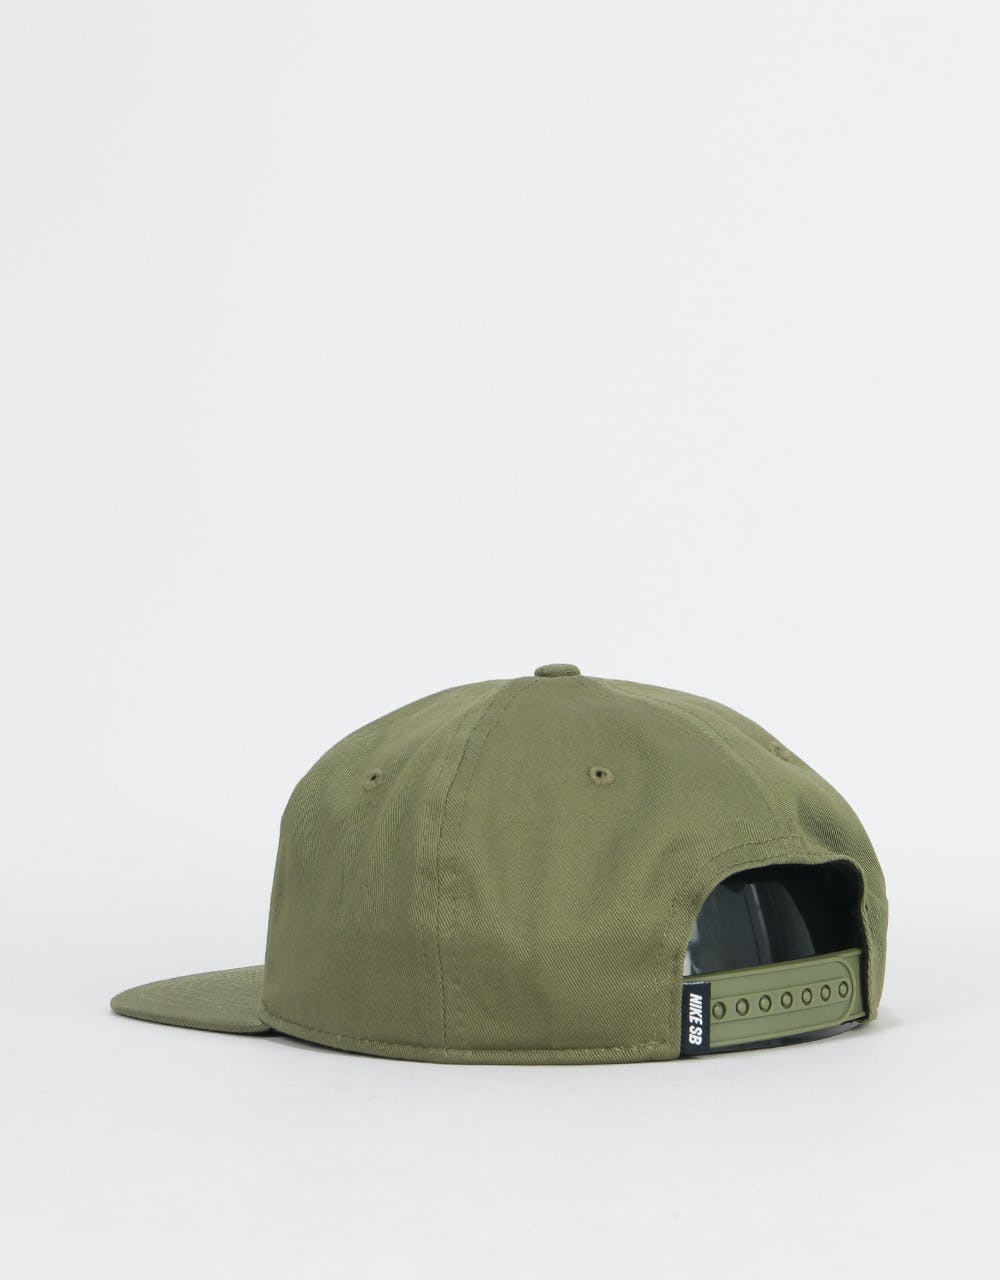 Nike SB Pro Snapback Cap - Medium Olive/Sequoia/Medium Olive